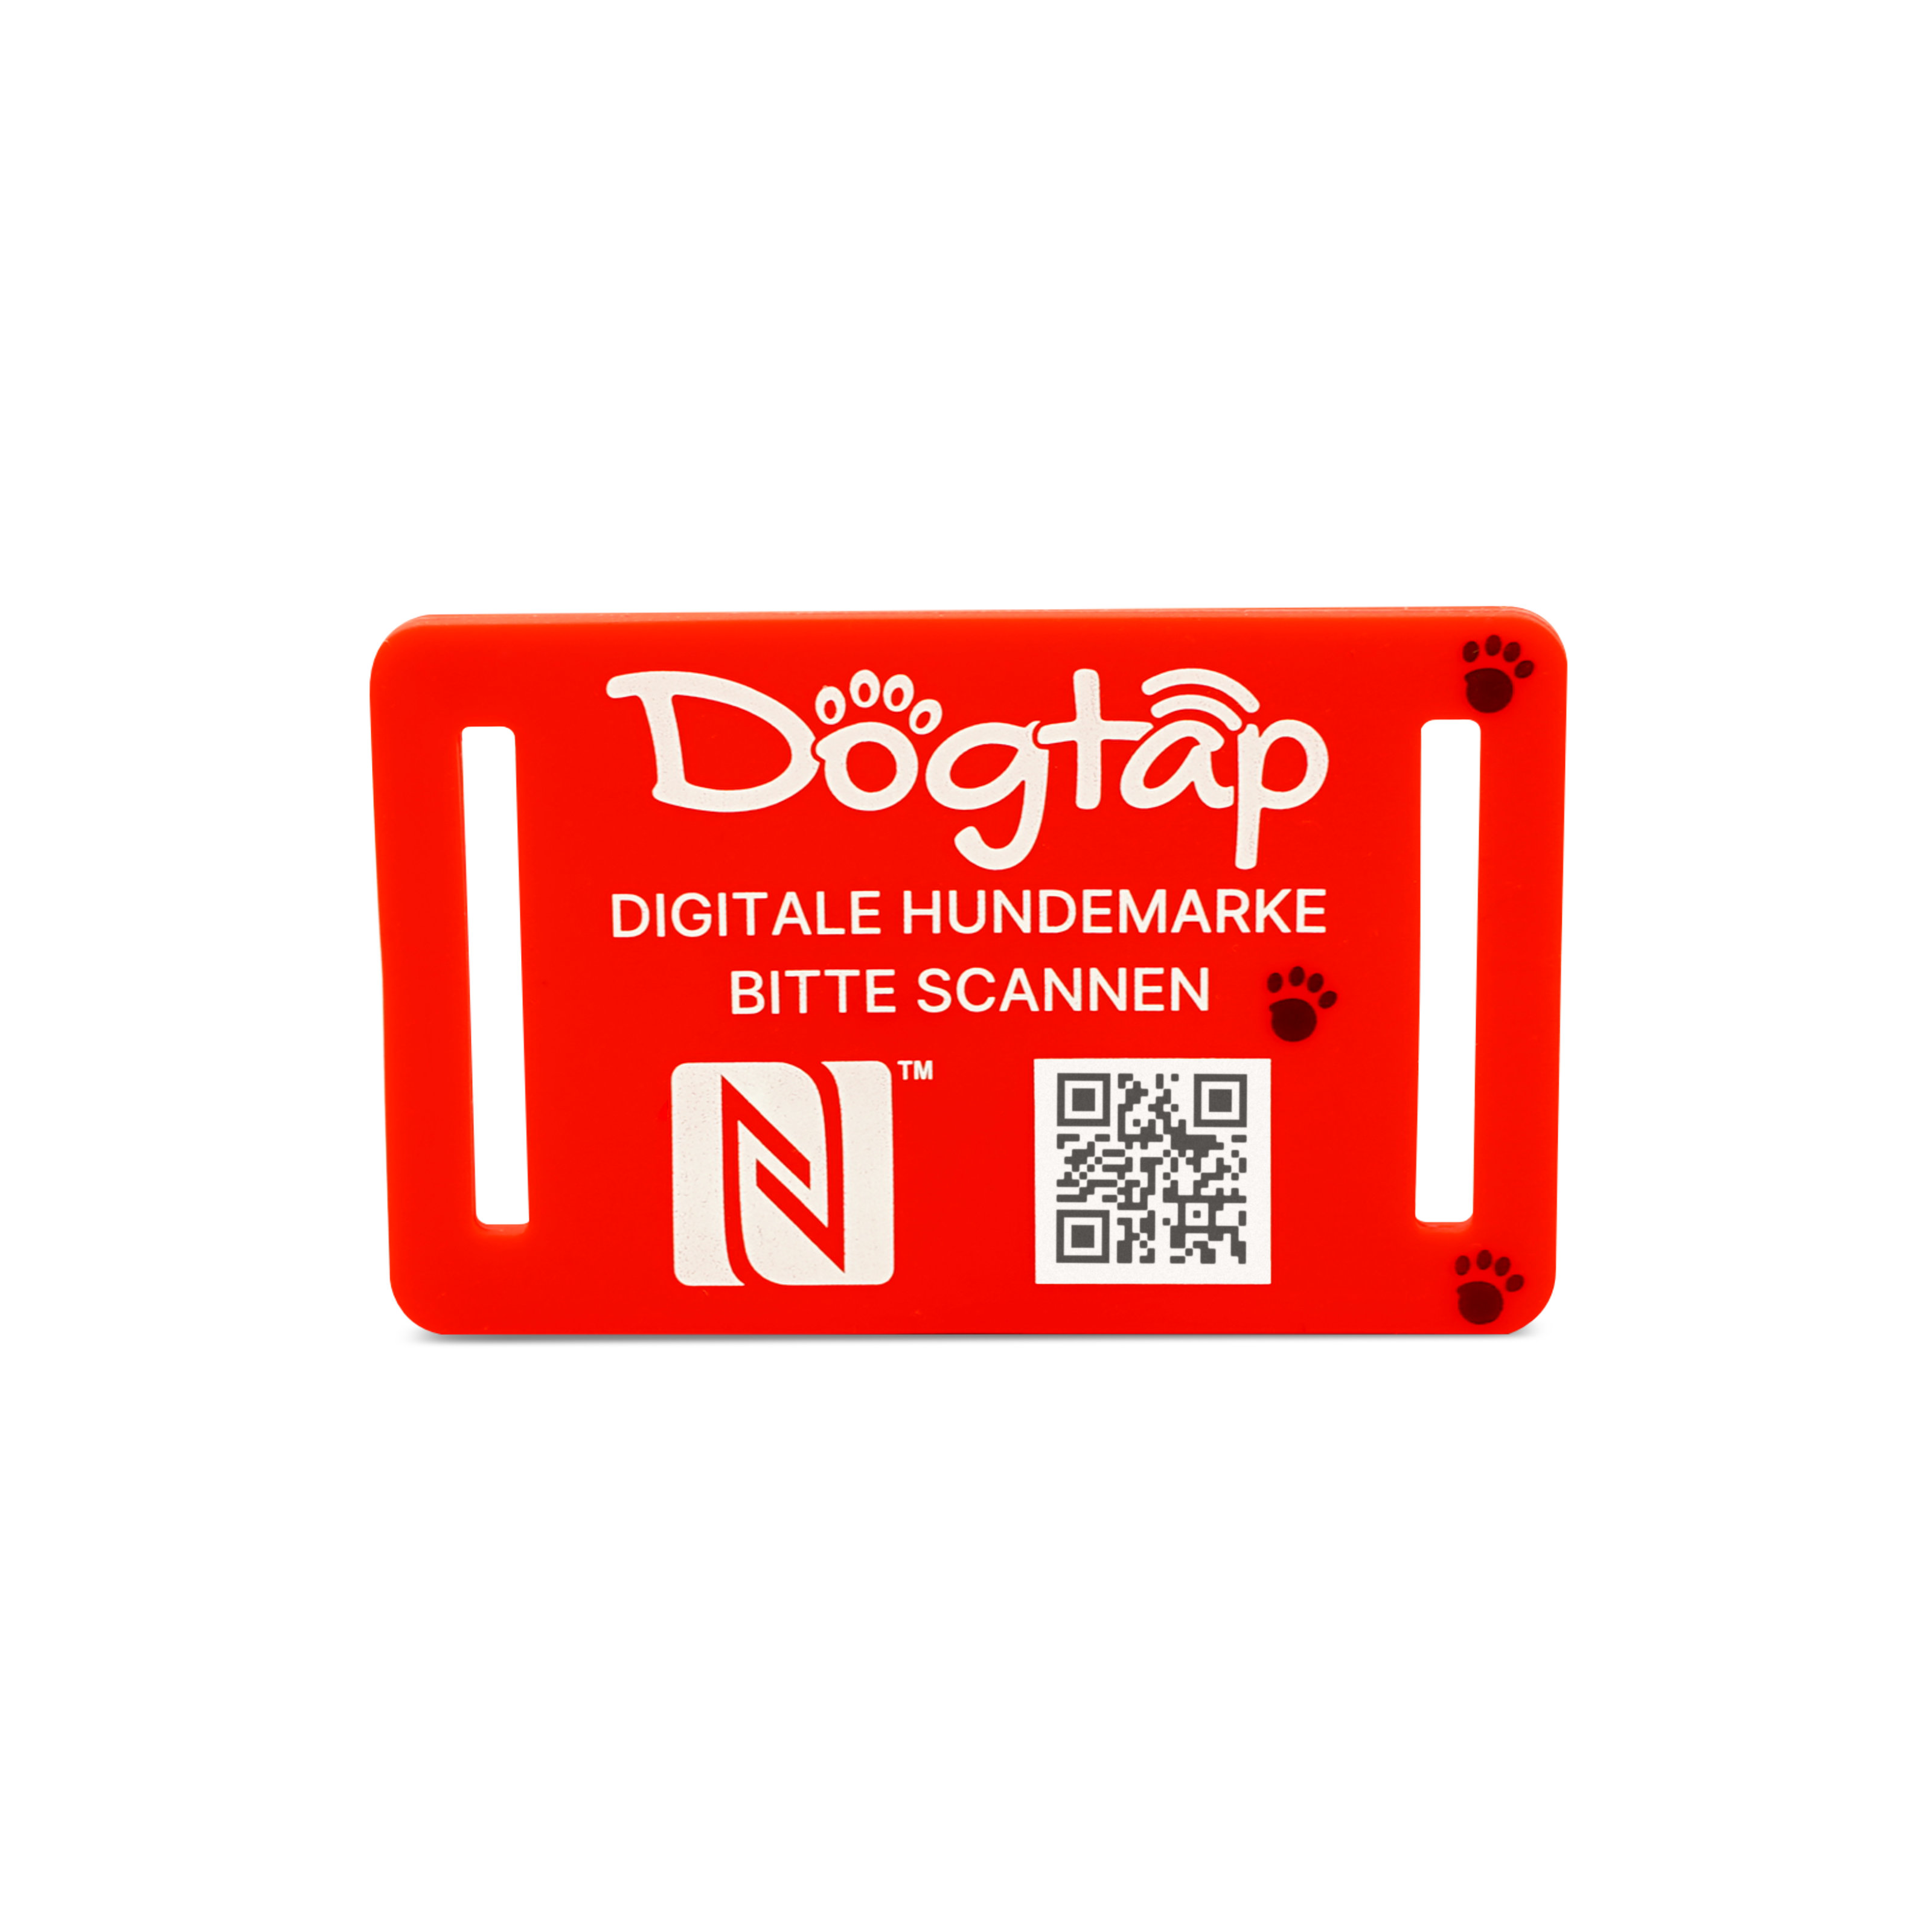 Dogtap Light Big - Digital dog tag - silicone - 67 x 40 mm - red